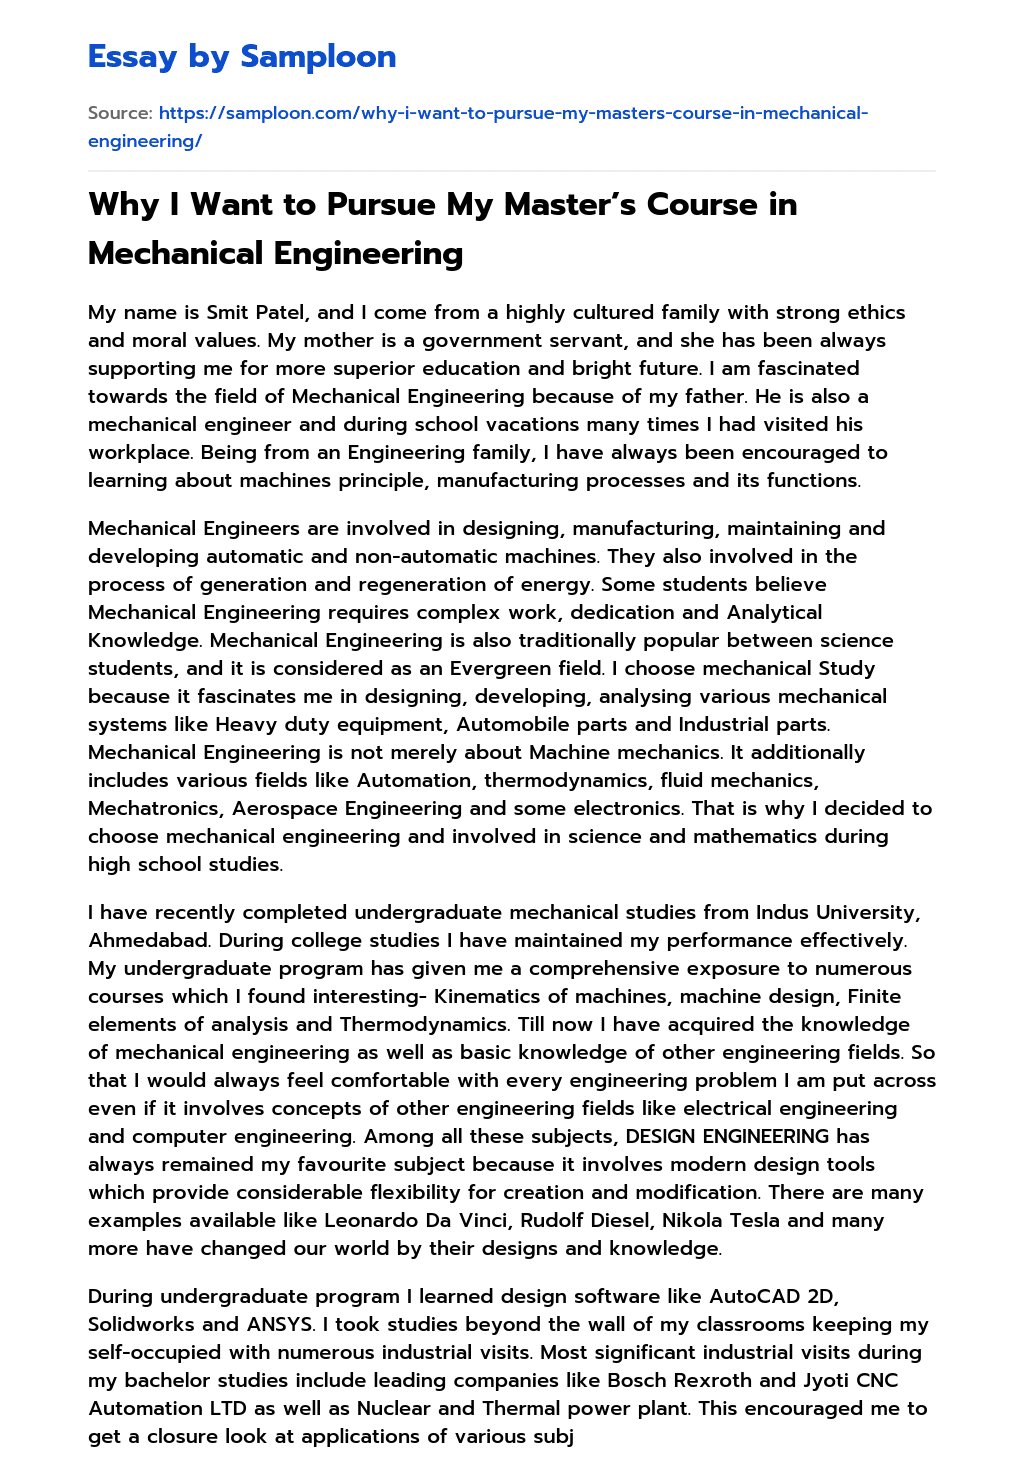 why choose mechanical engineering essay